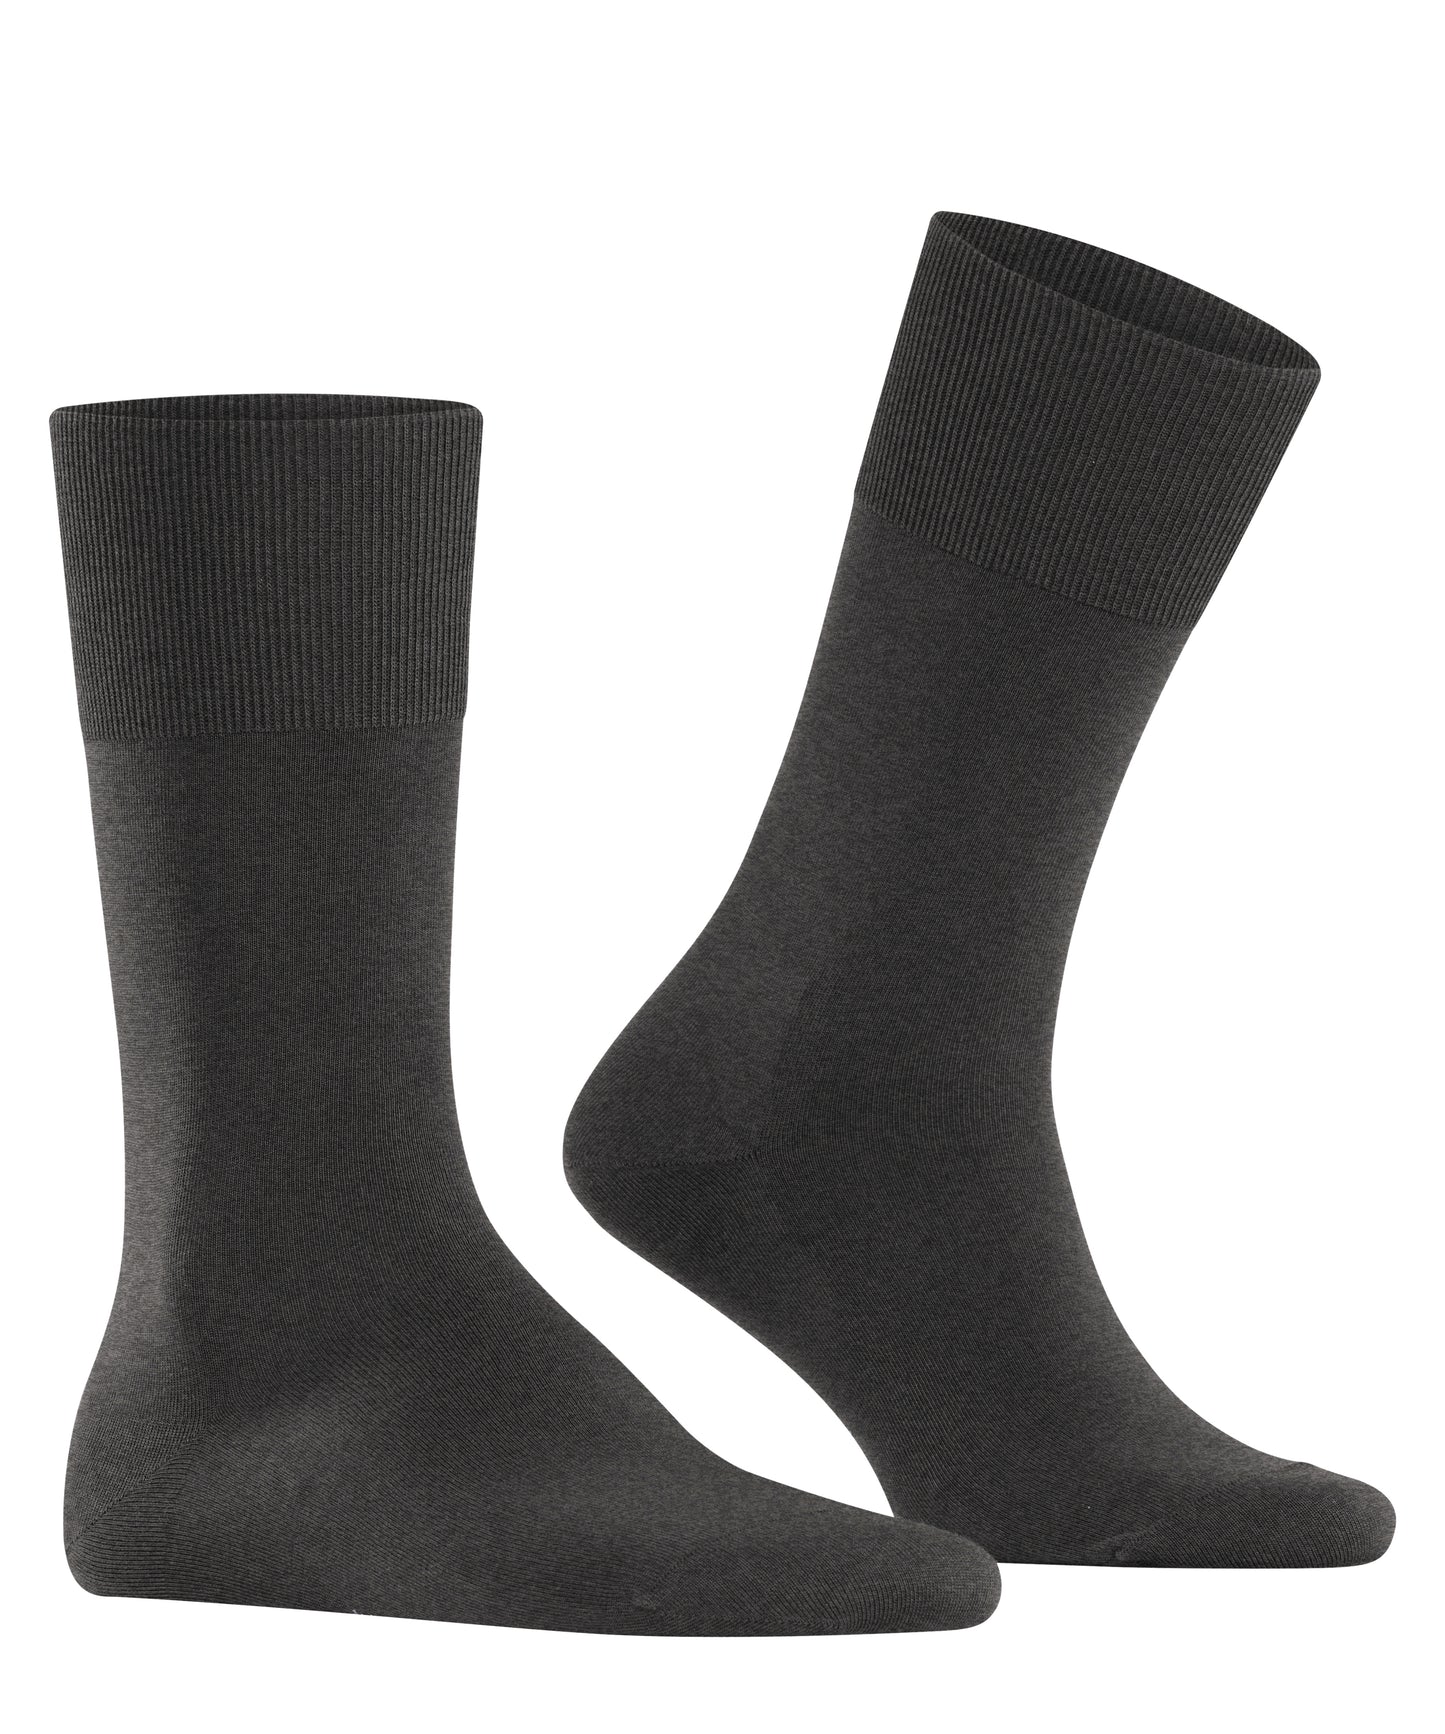 Climawool Socks